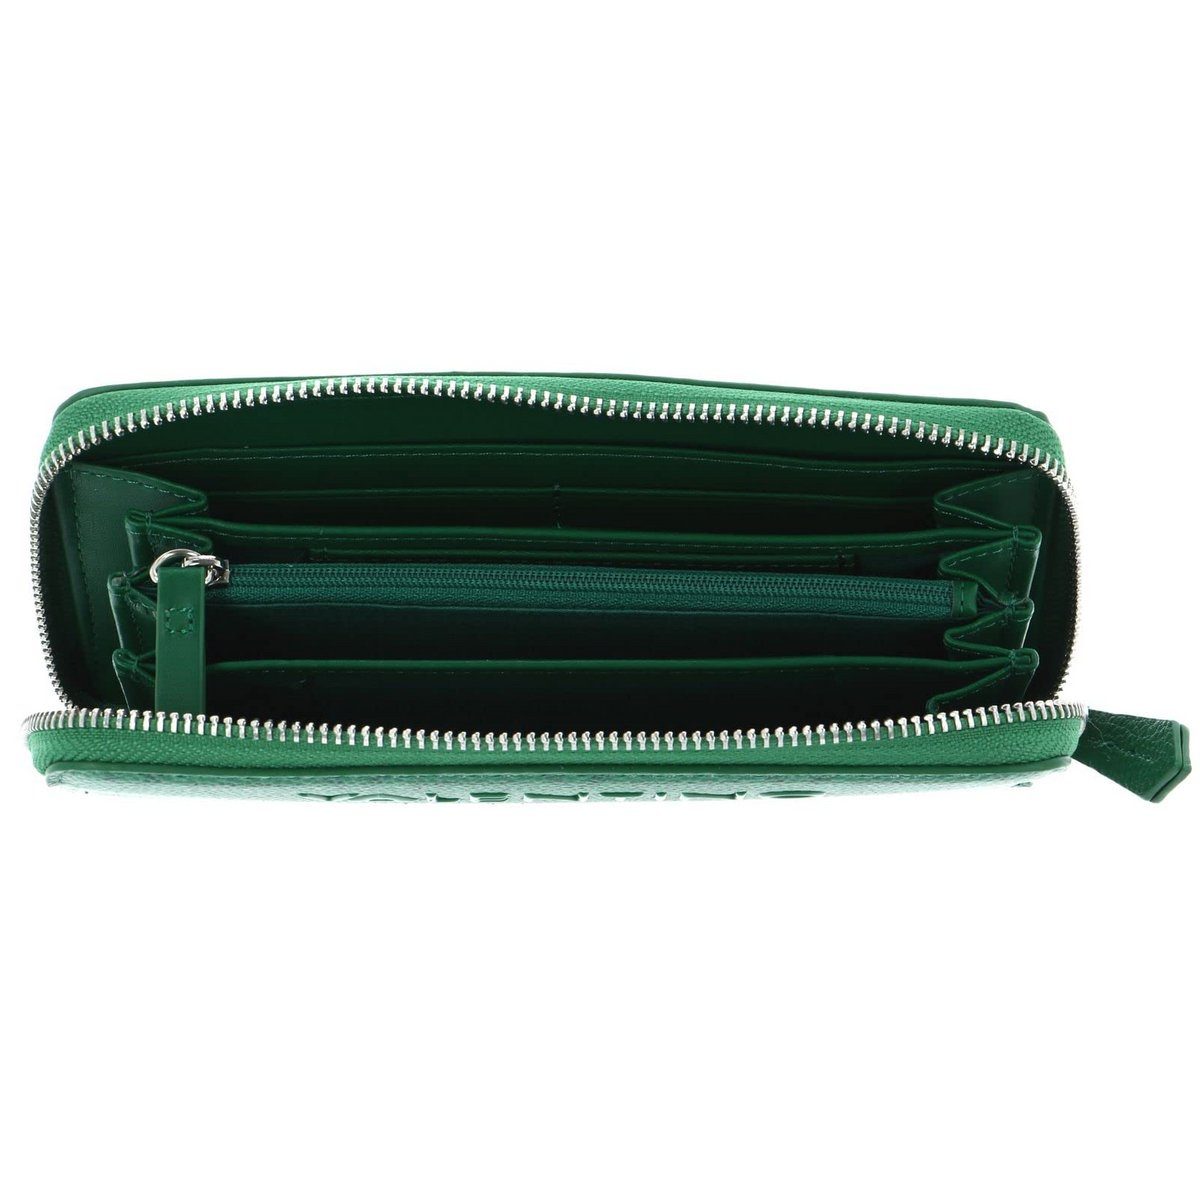 VALENTINO BAGS Geldbörse grün (1-tlg., Multicolor Angabe) keine Verde 